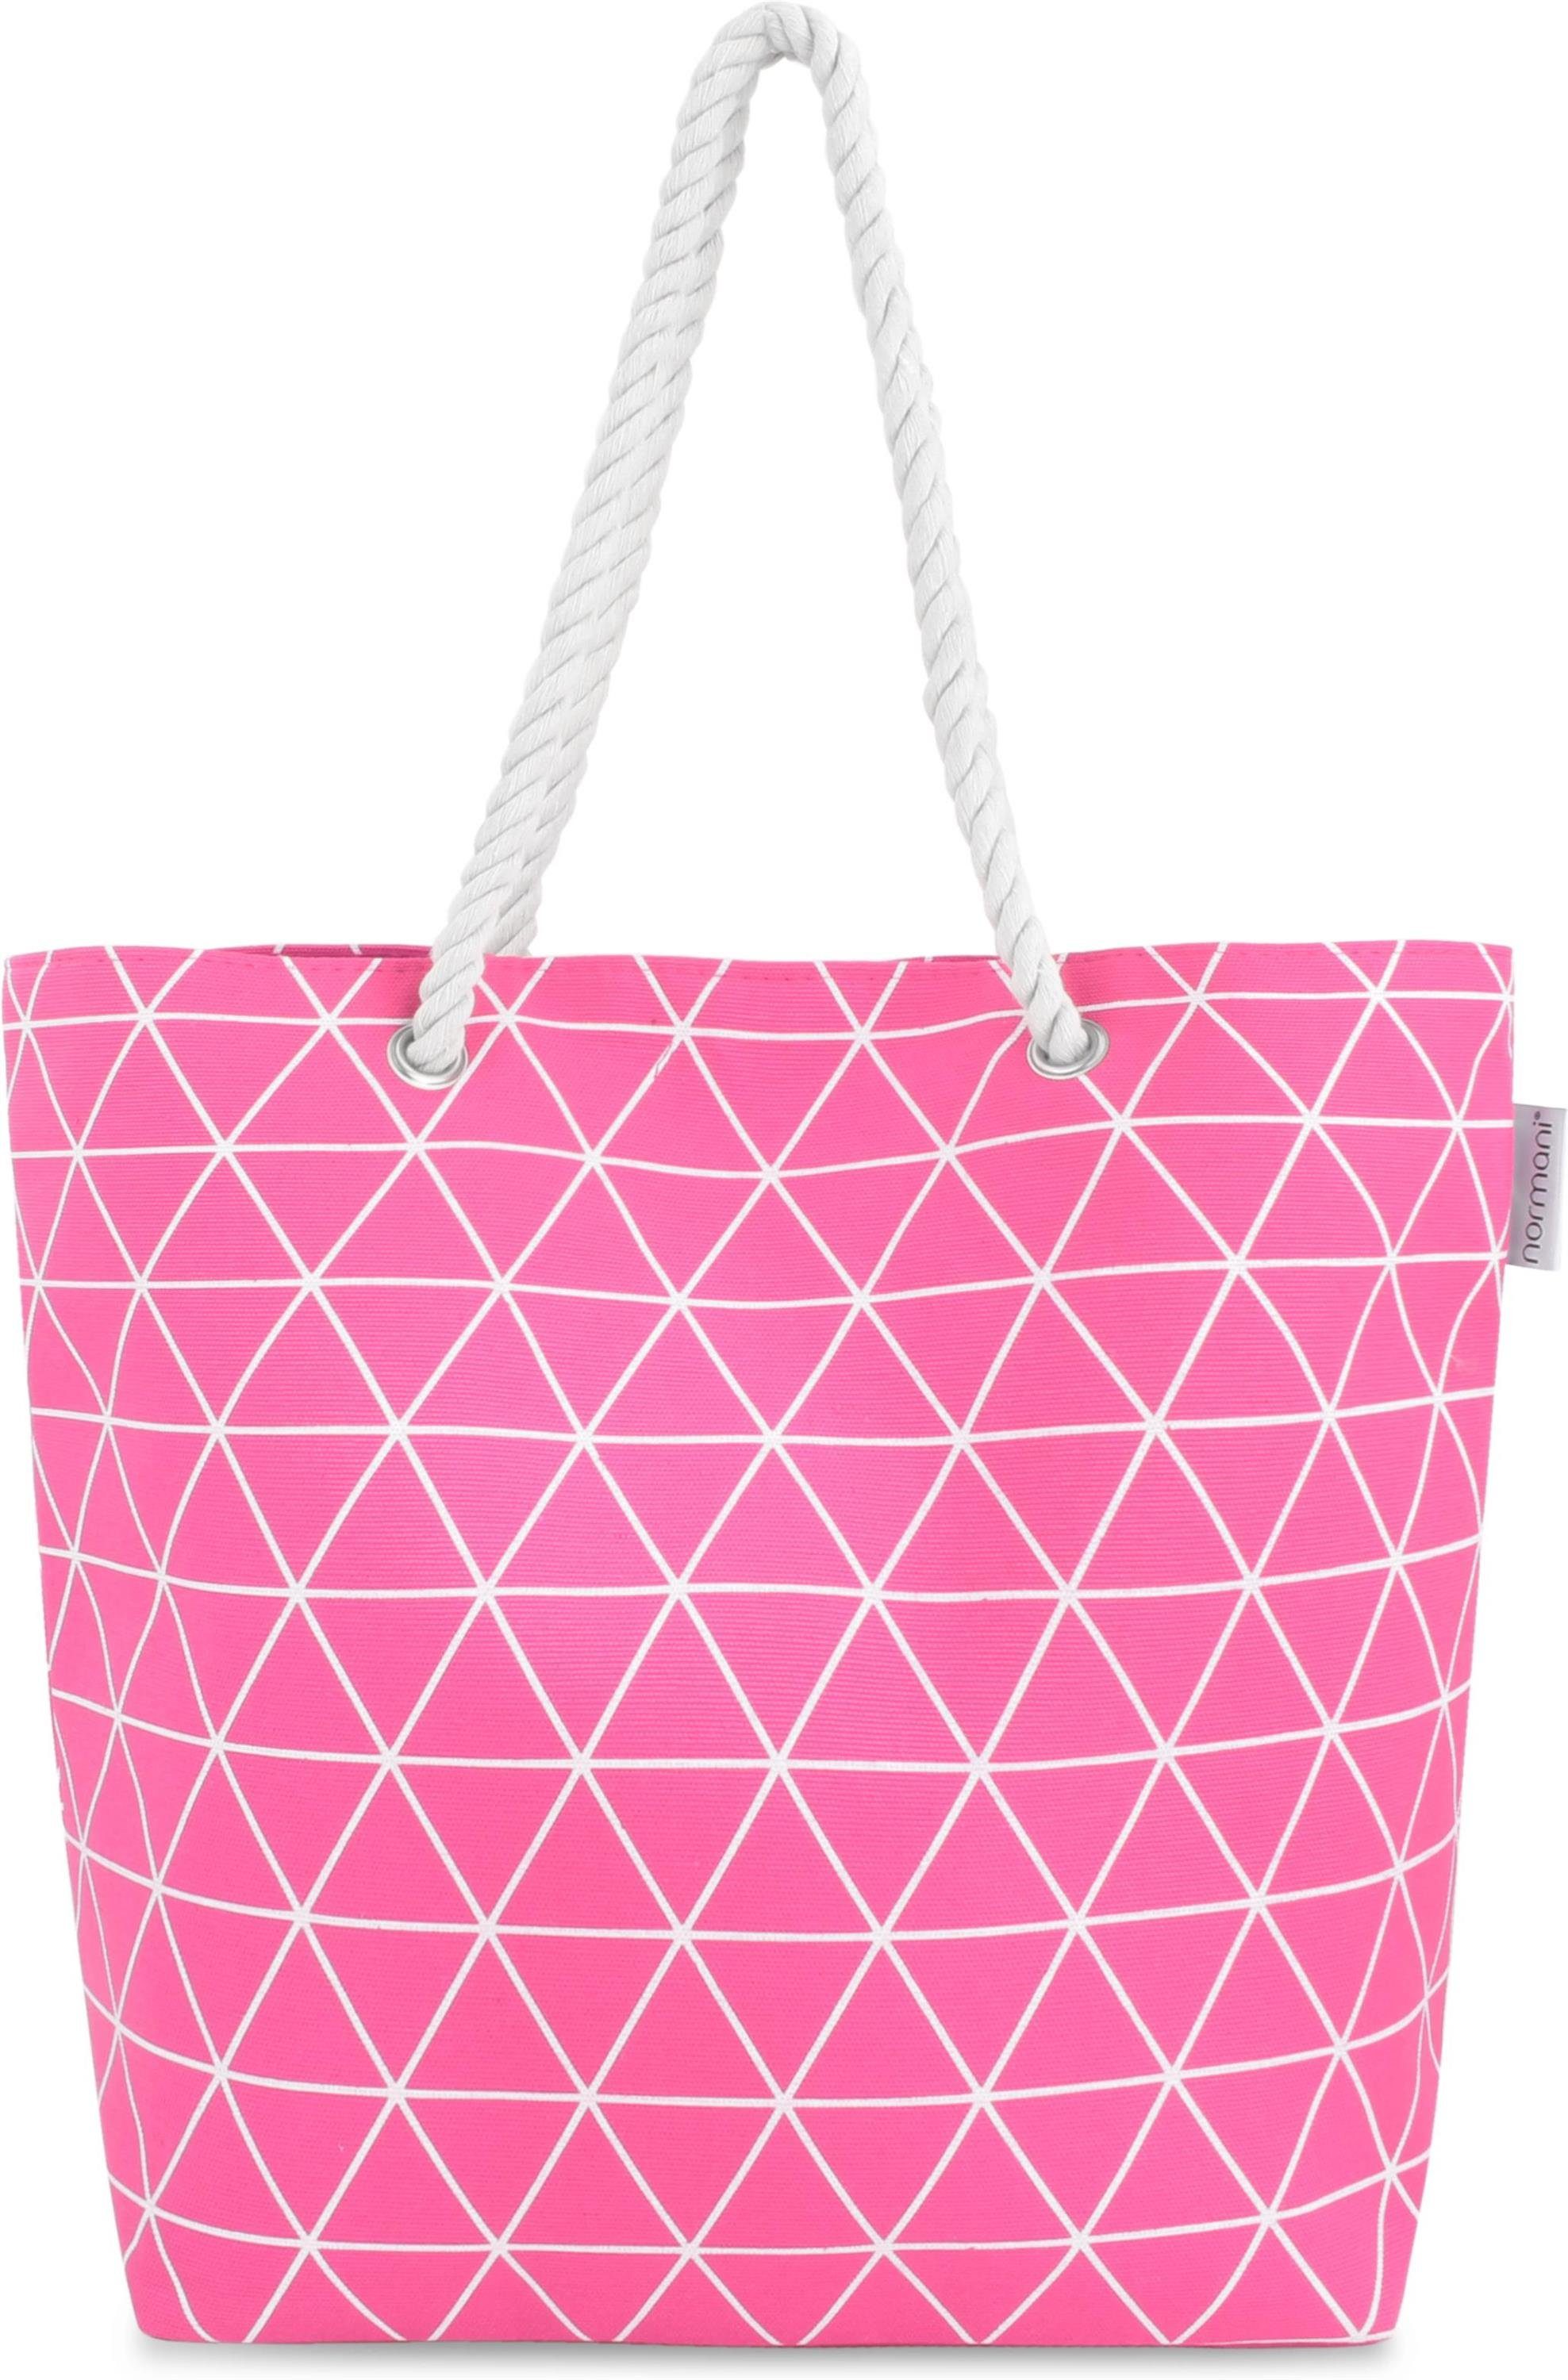 normani Strandtasche Bequeme Sommer-Umhängetasche, Strandtasche, Schultertasche als Henkeltasche tragbar Koko Pink